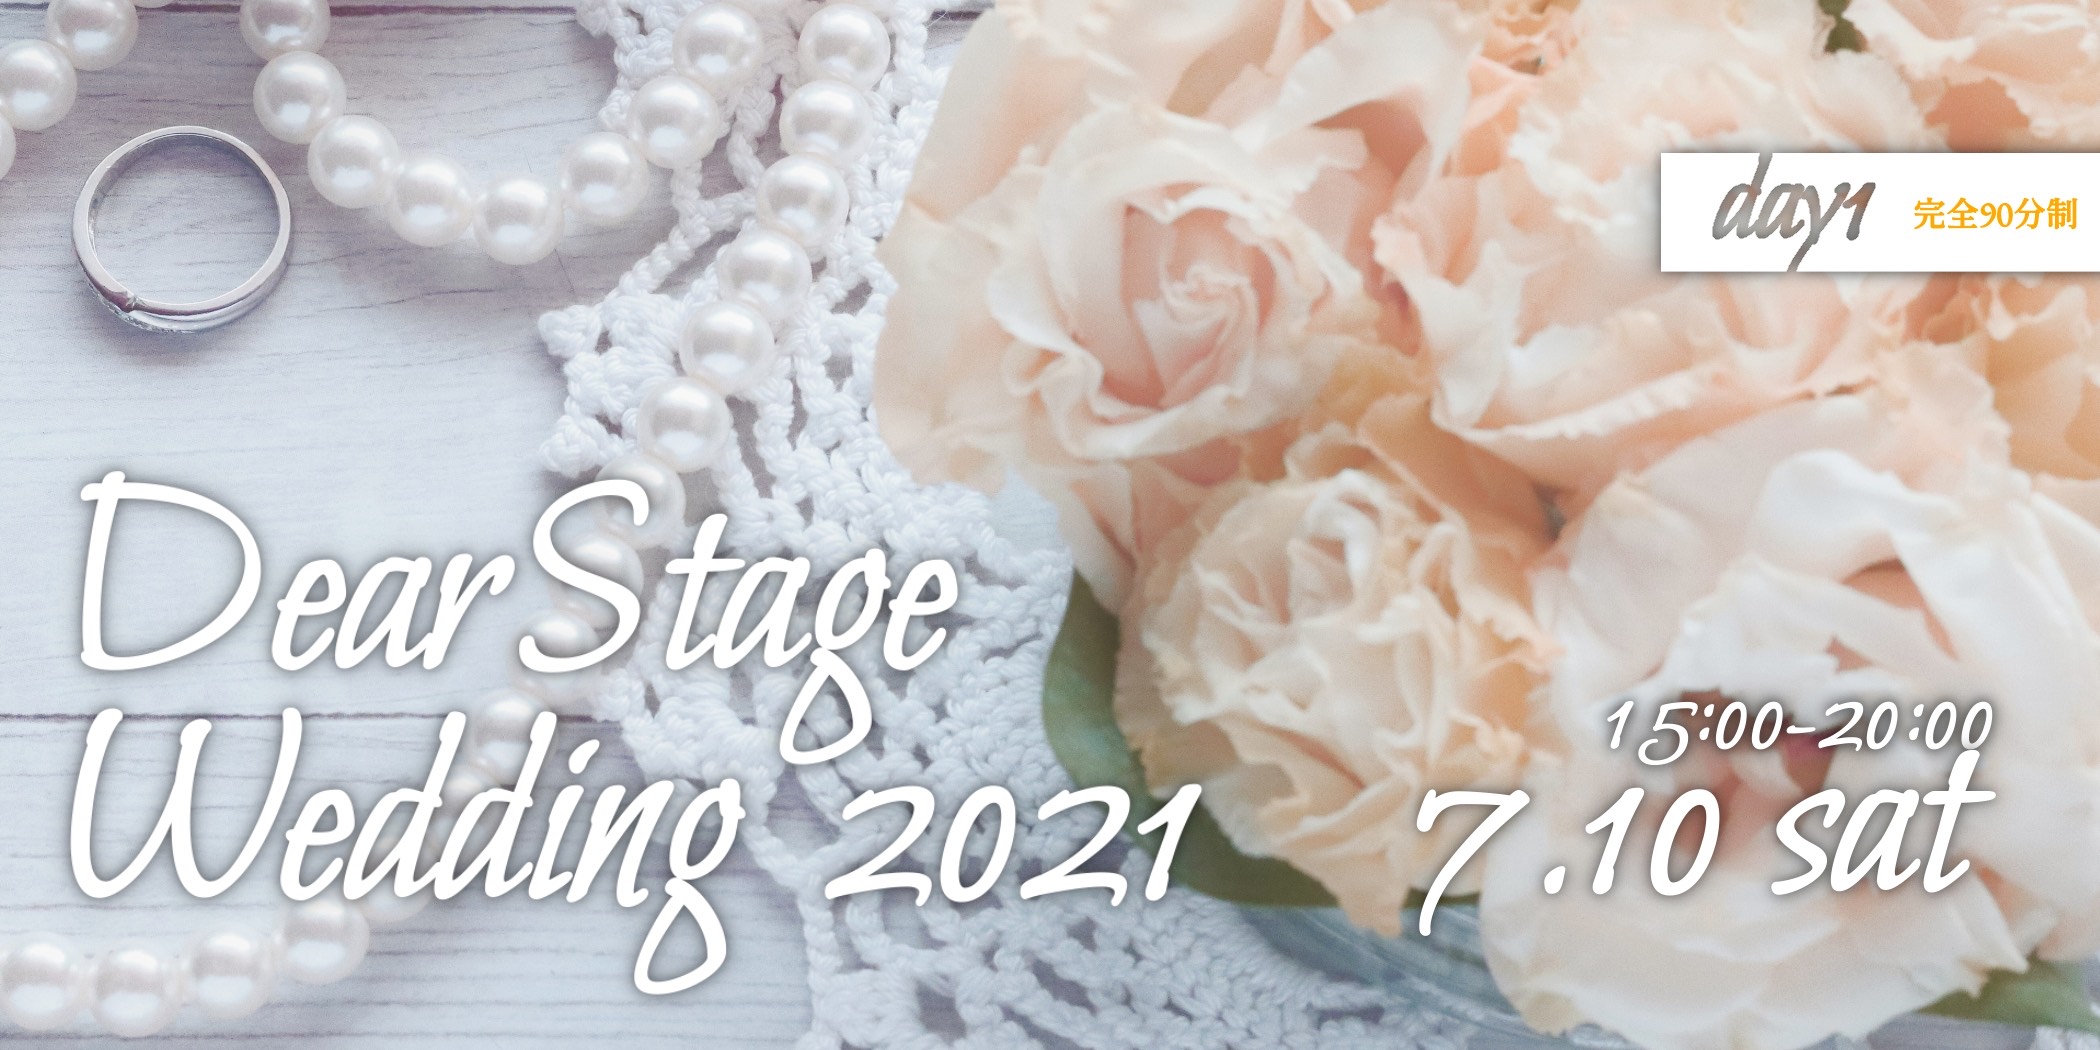 DearStage Wedding 2021